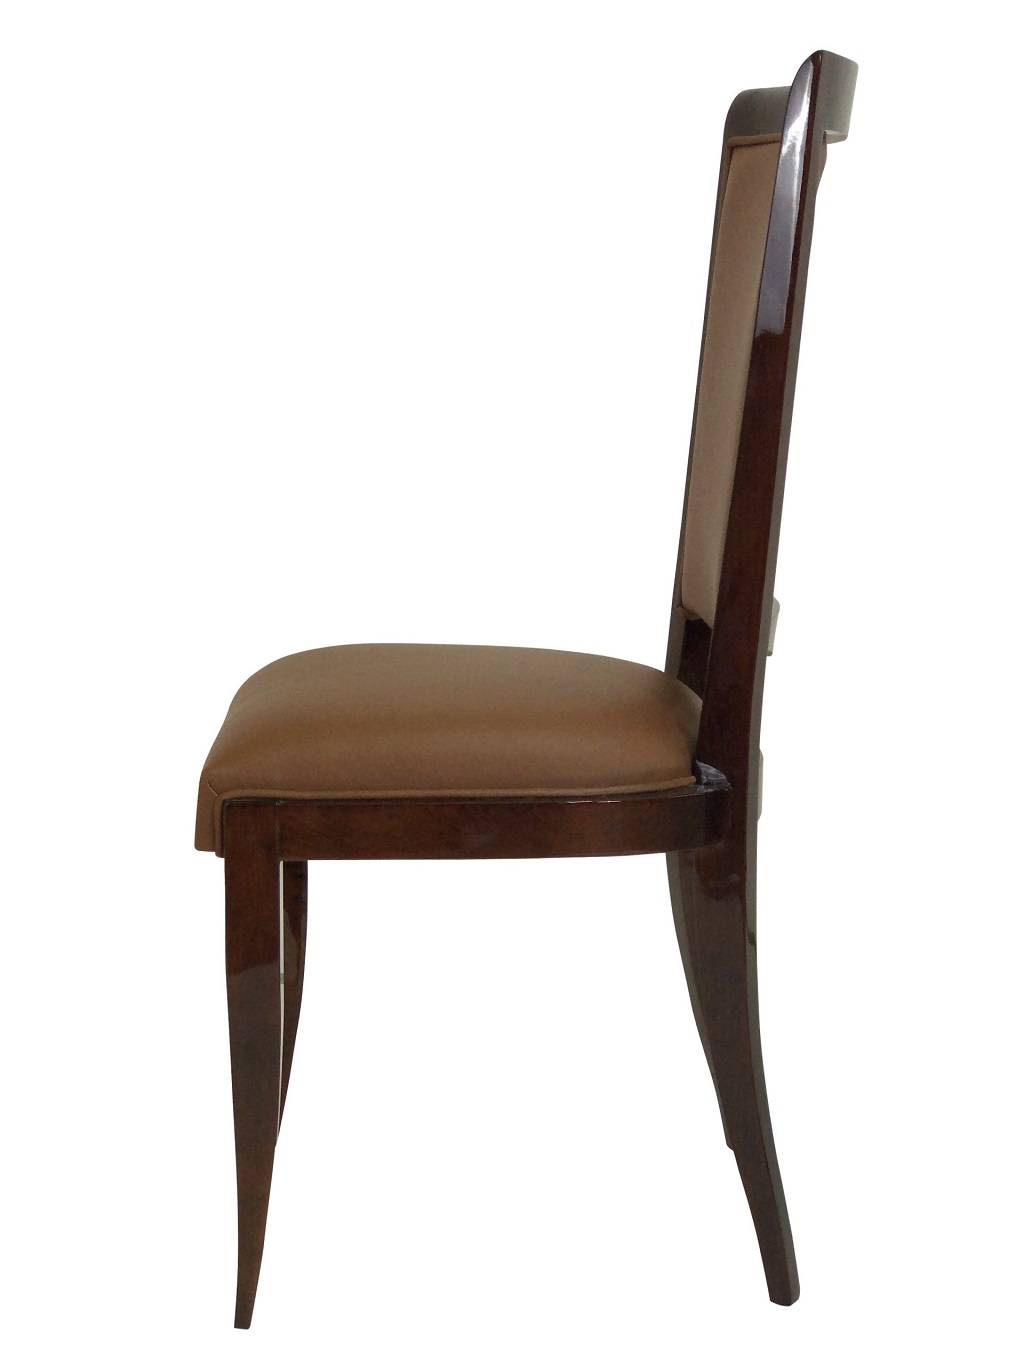 Art Deco chair side